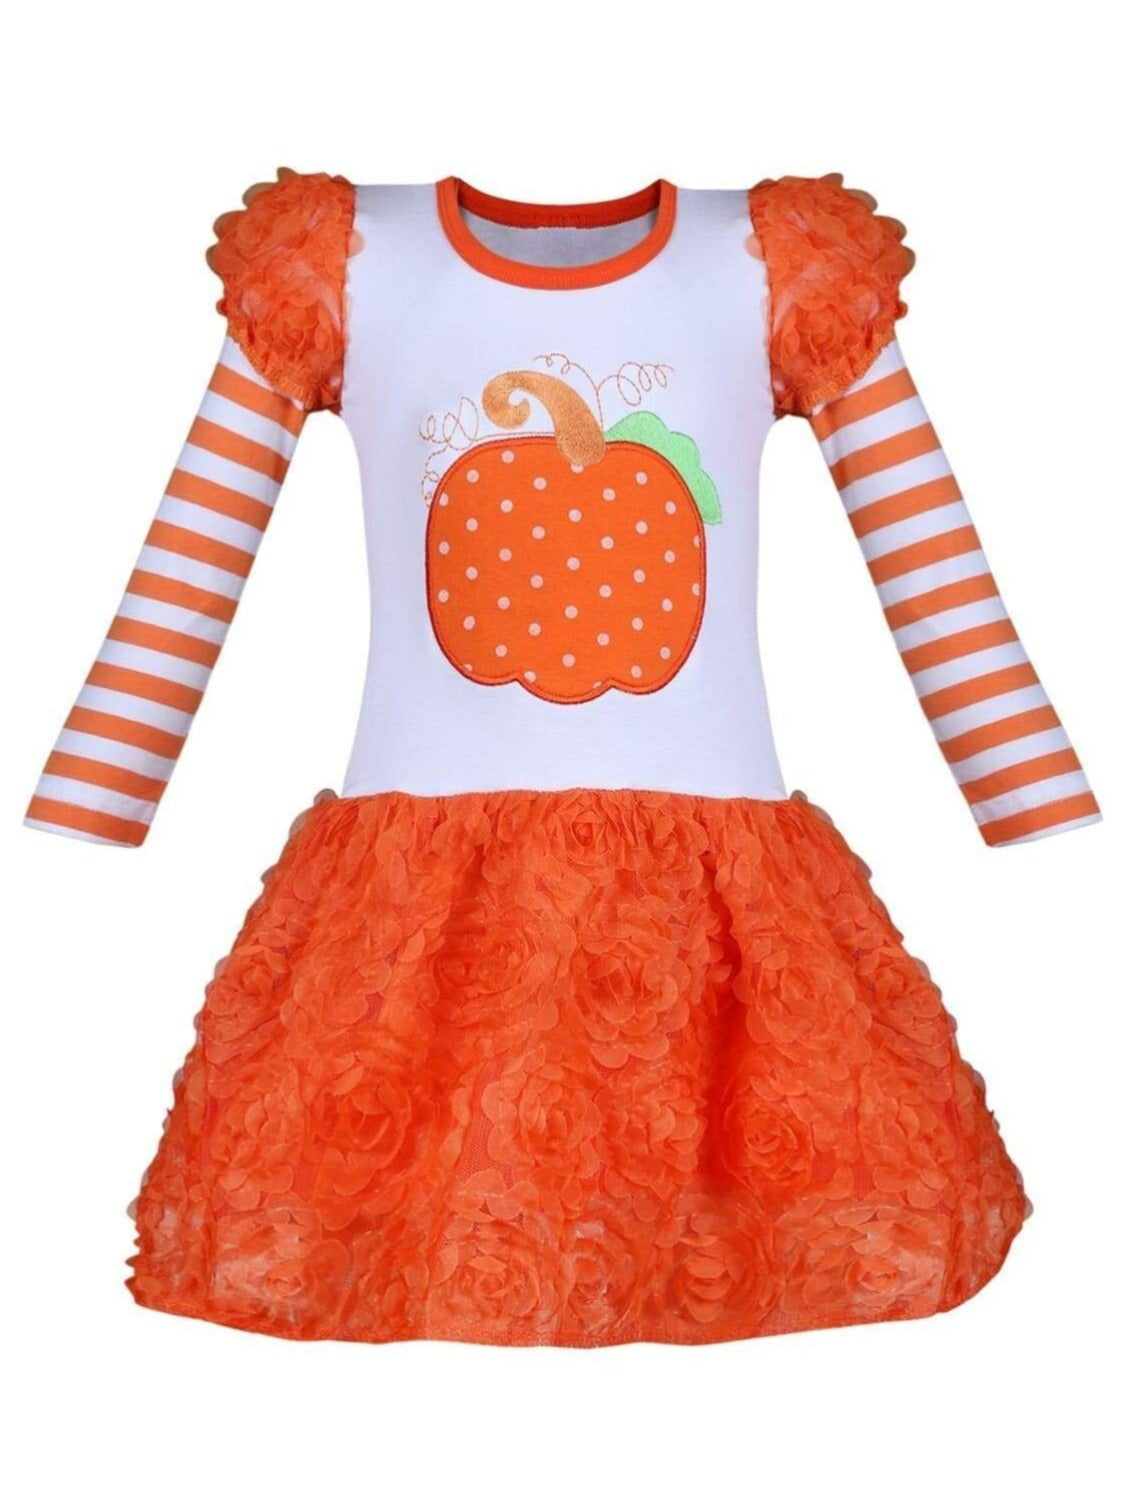 Girls Striped Puff Long Sleeve Orange Tutu Skirt Dress with Pumpkin Applique - Orange / XS-2T - Girls Fall Casual Dress